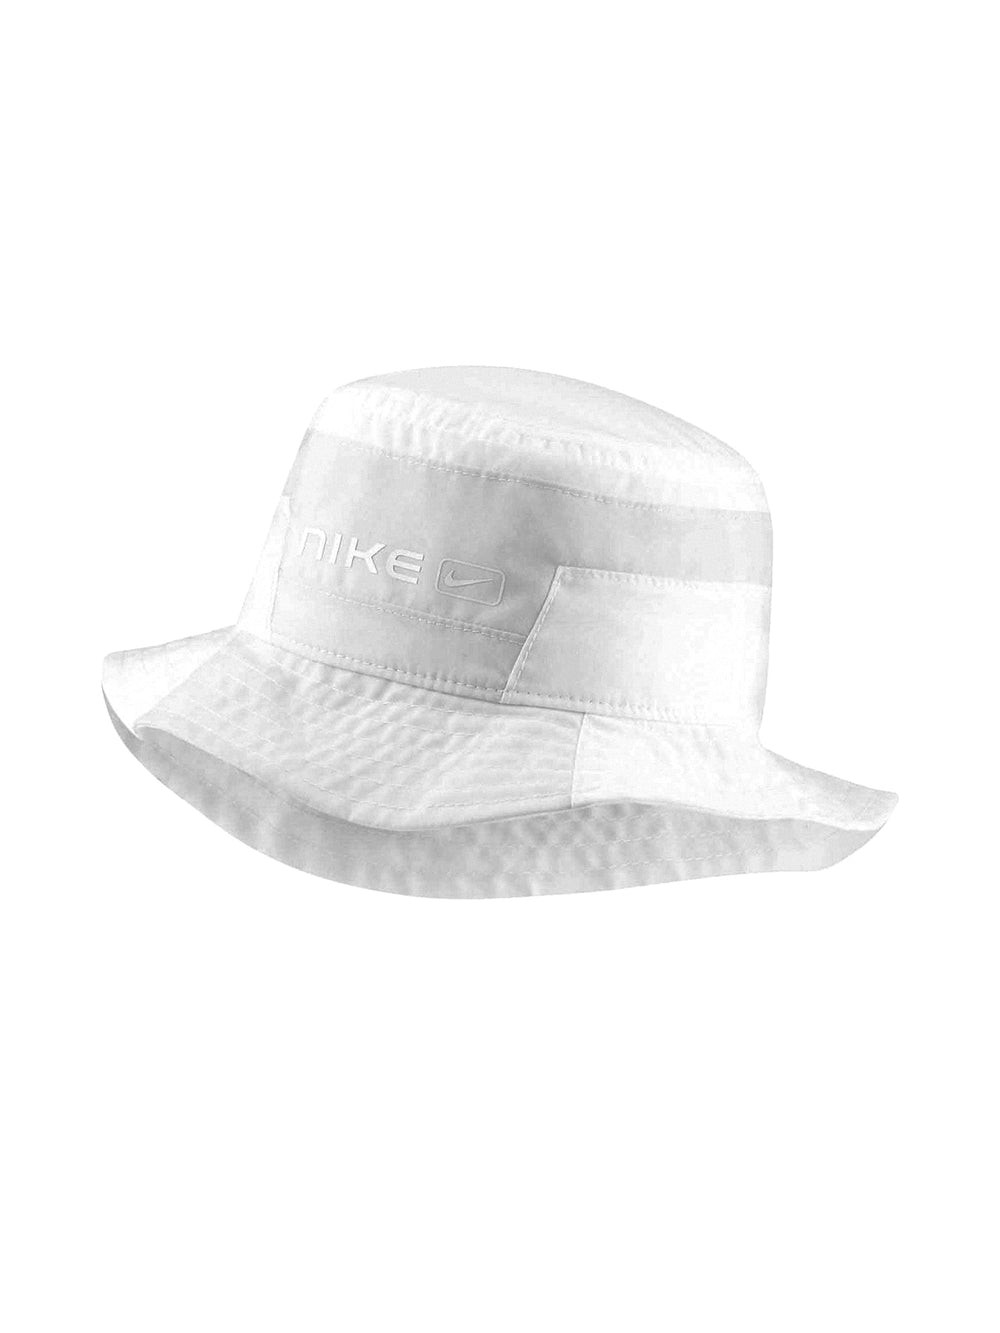 NIKE NSW SSNL BUCKET HAT - WHITE - CLEARANCE